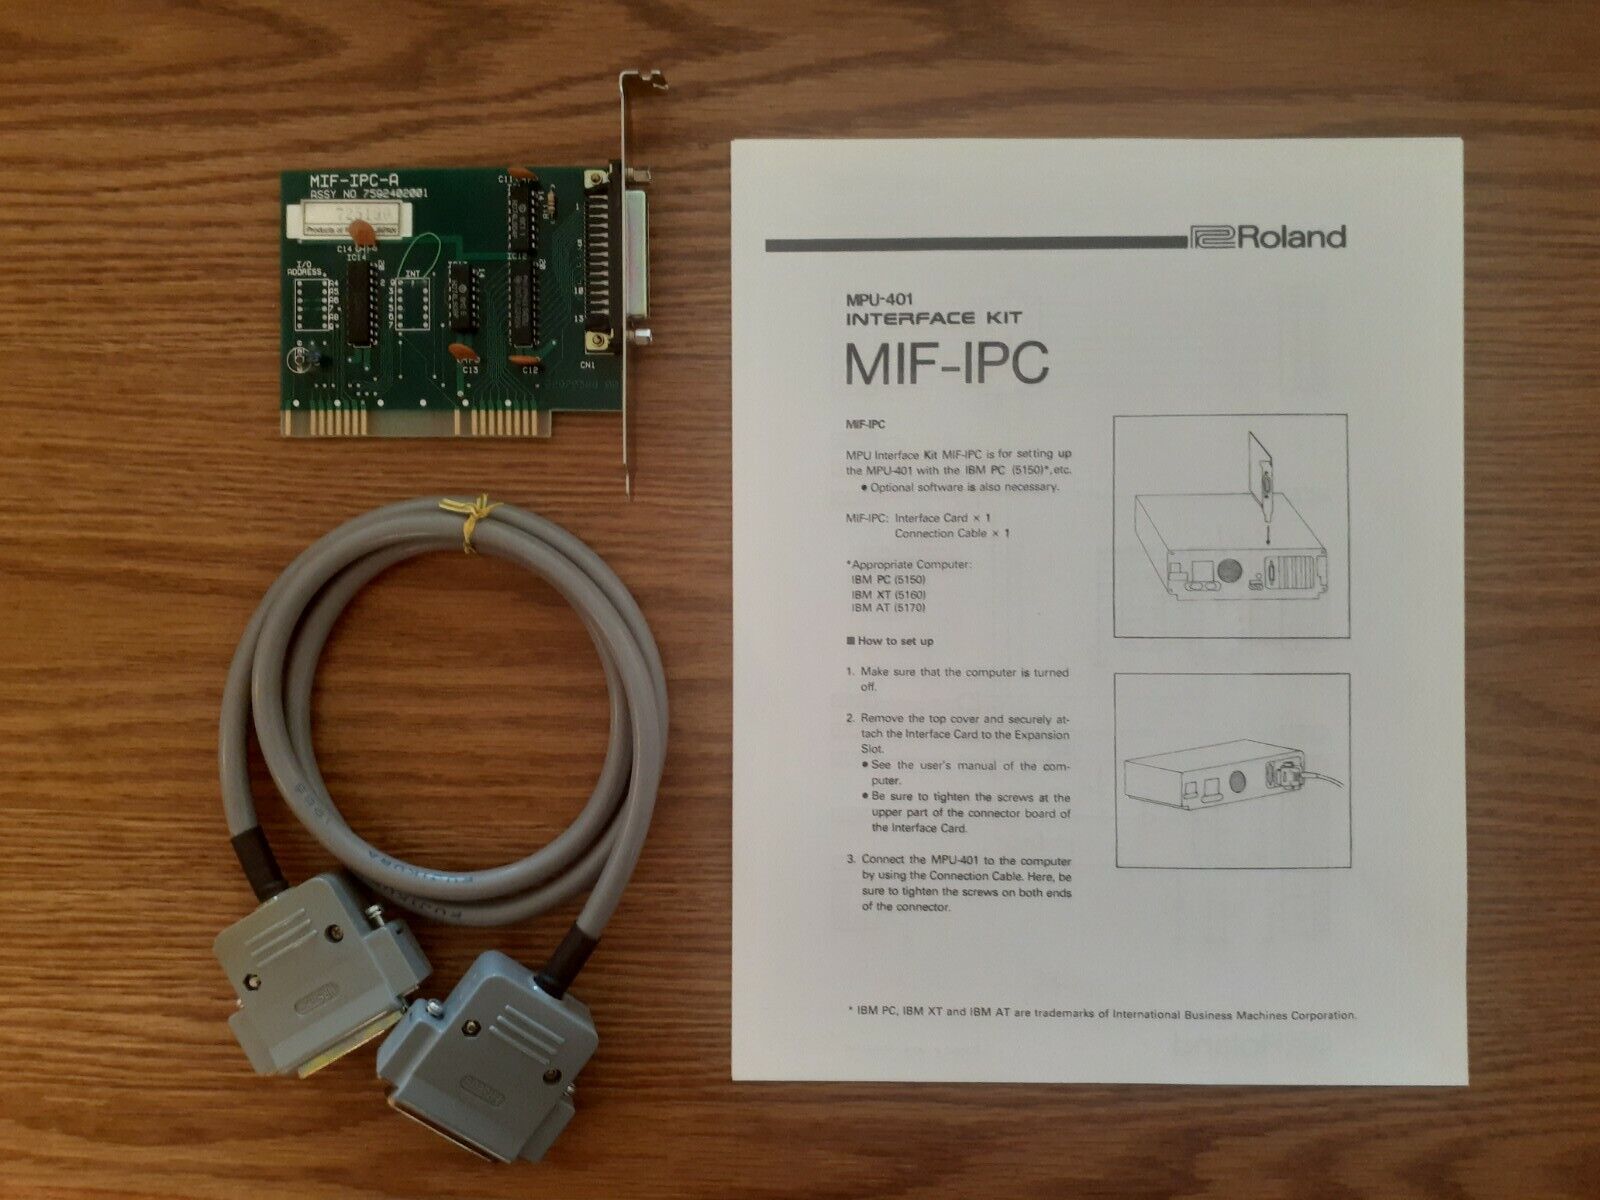 Roland MIF-IPC-A Sound Card for MPU-401 and MT-32 compatible MIDI Sound Modules